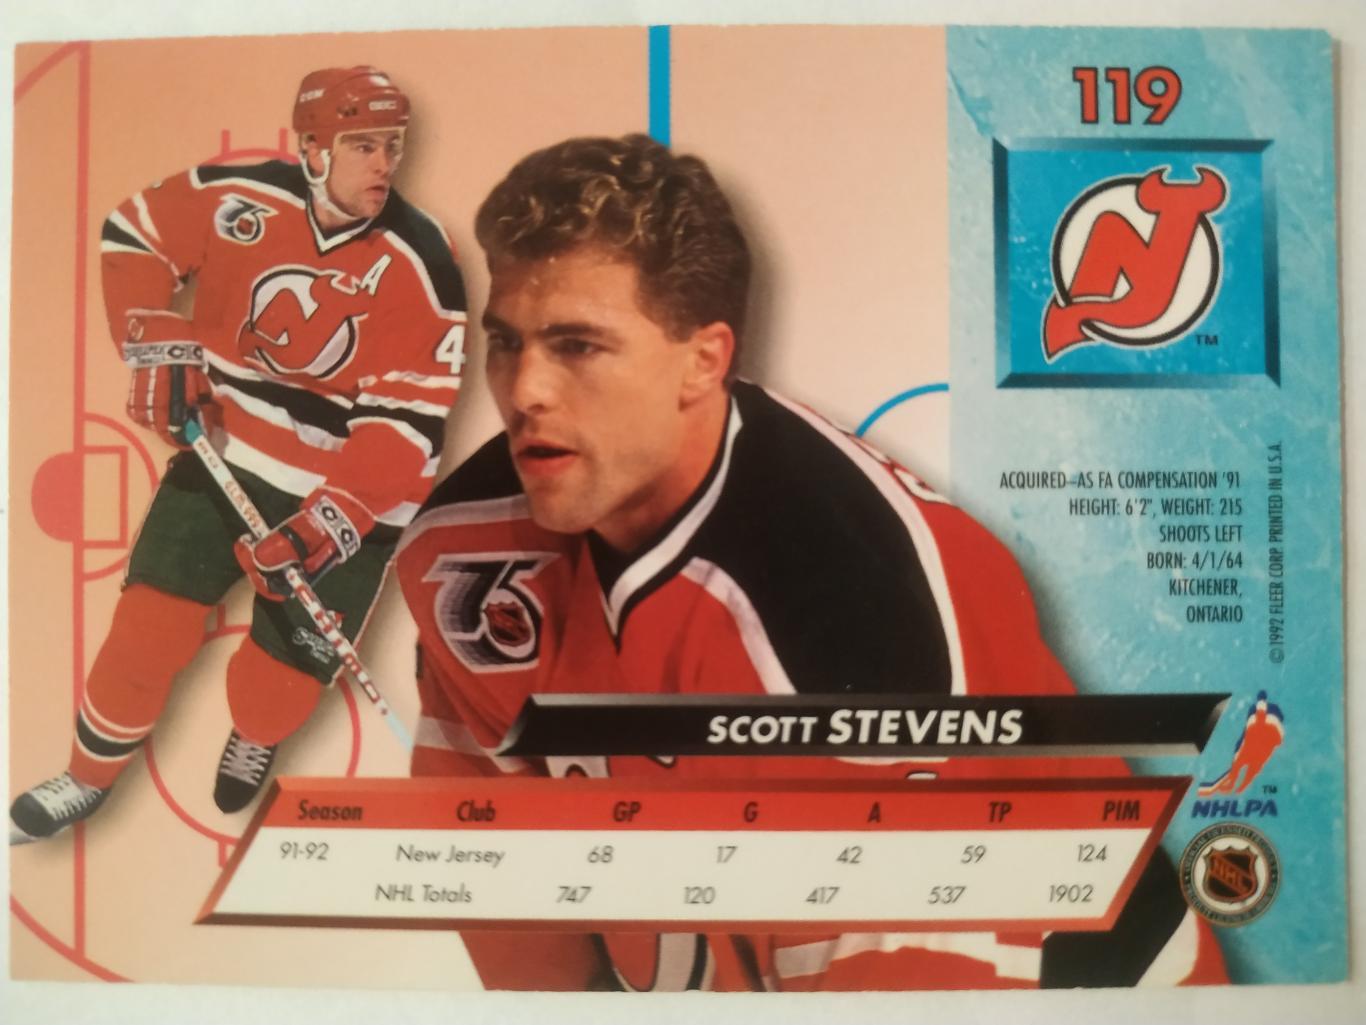 ХОККЕЙ КАРТОЧКА НХЛ FLEER ULTRA 1992-93 NHL SCOTT STEVENS NEW JERSEY DEVILS #119 1